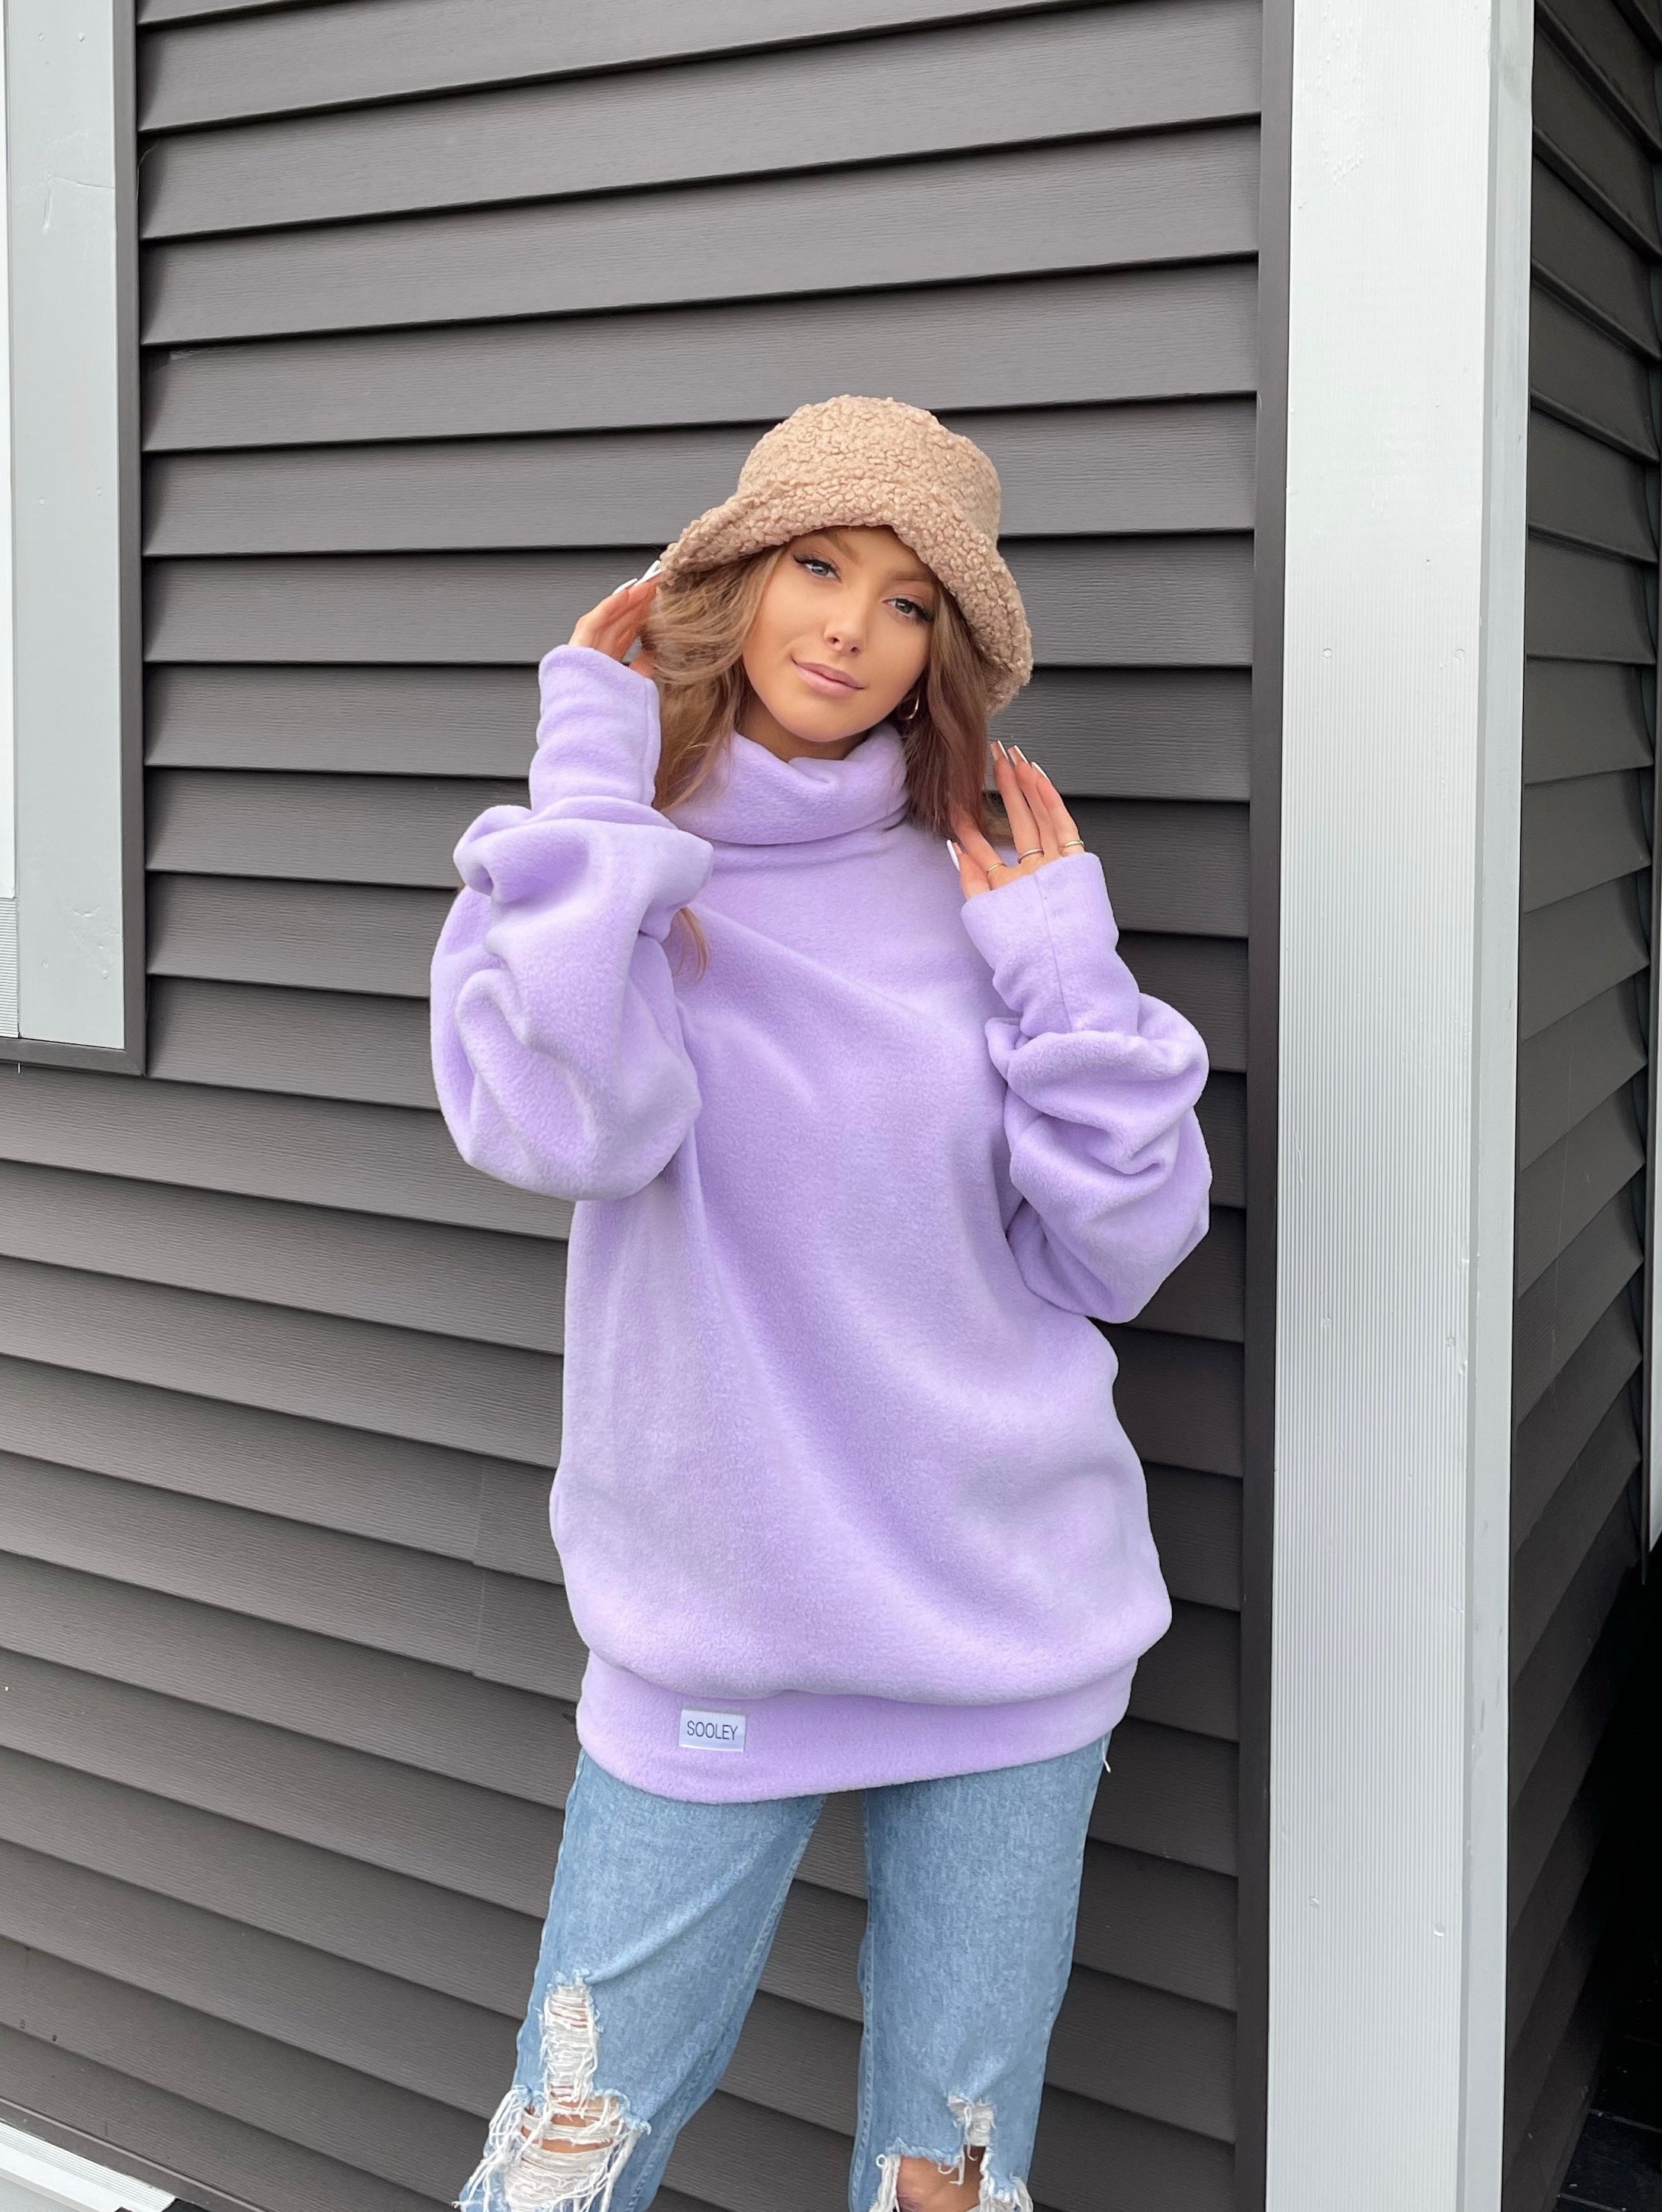 Sooley 2020 Sweater